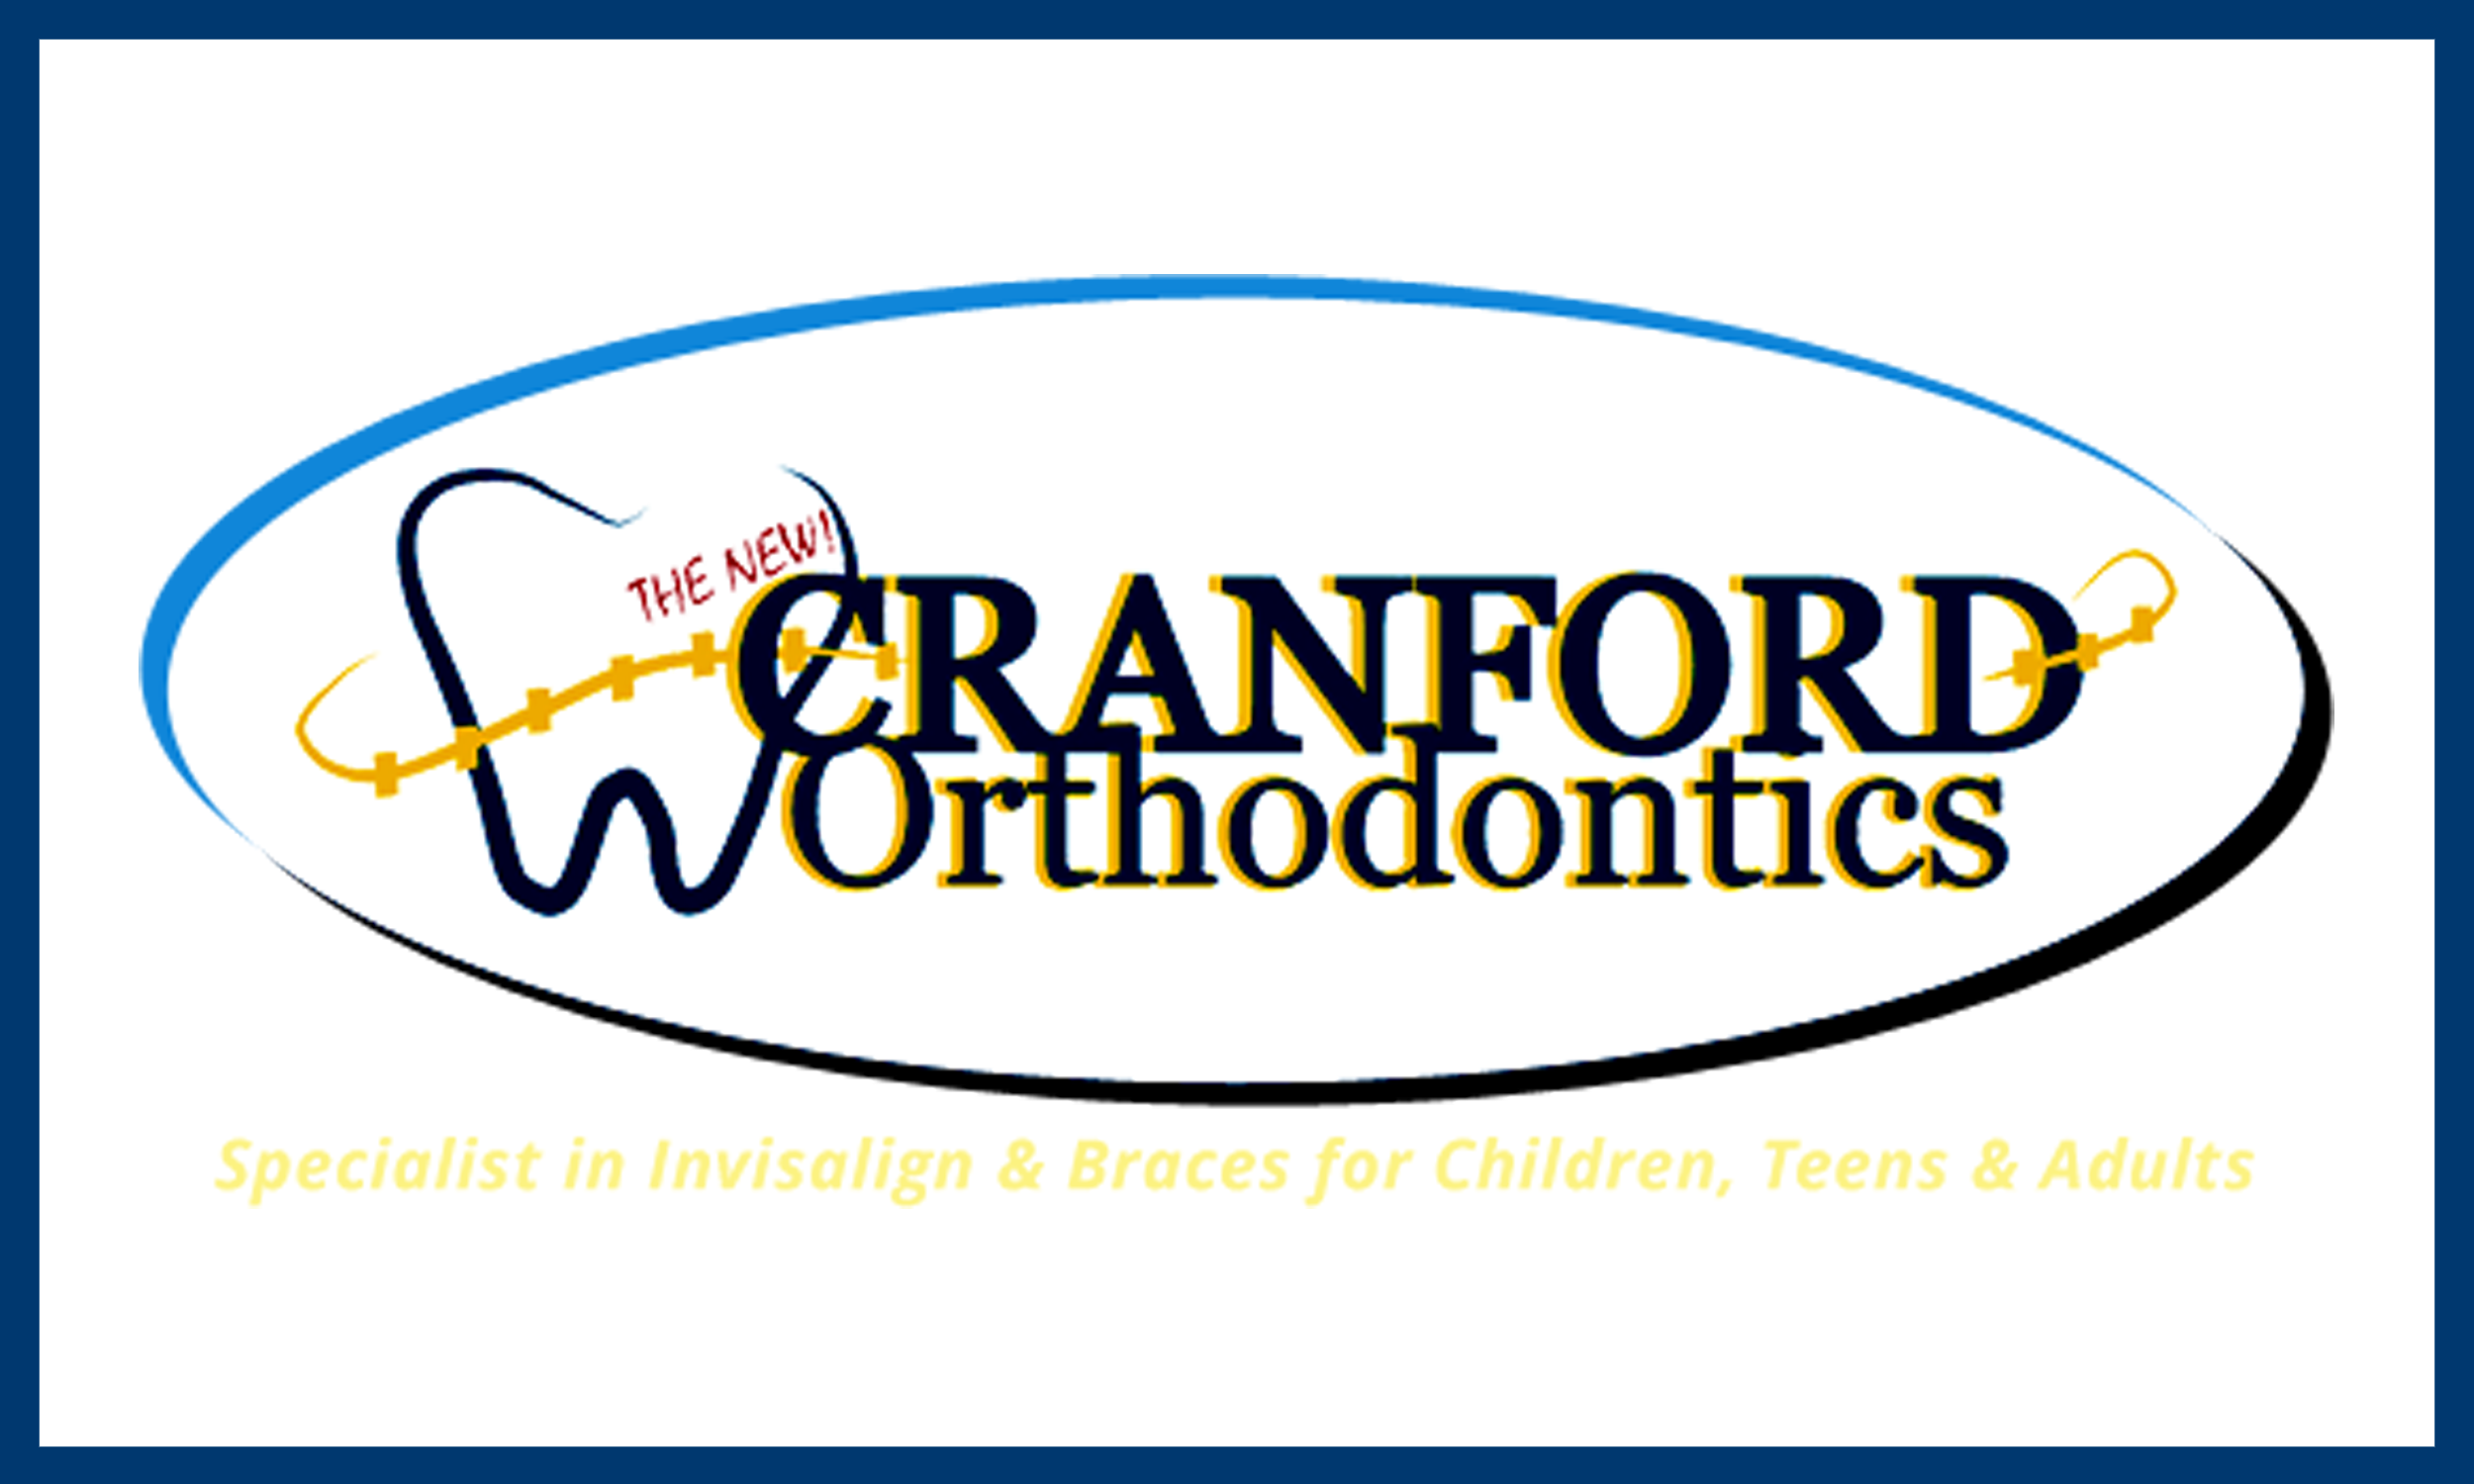 Cranford Orthodontics